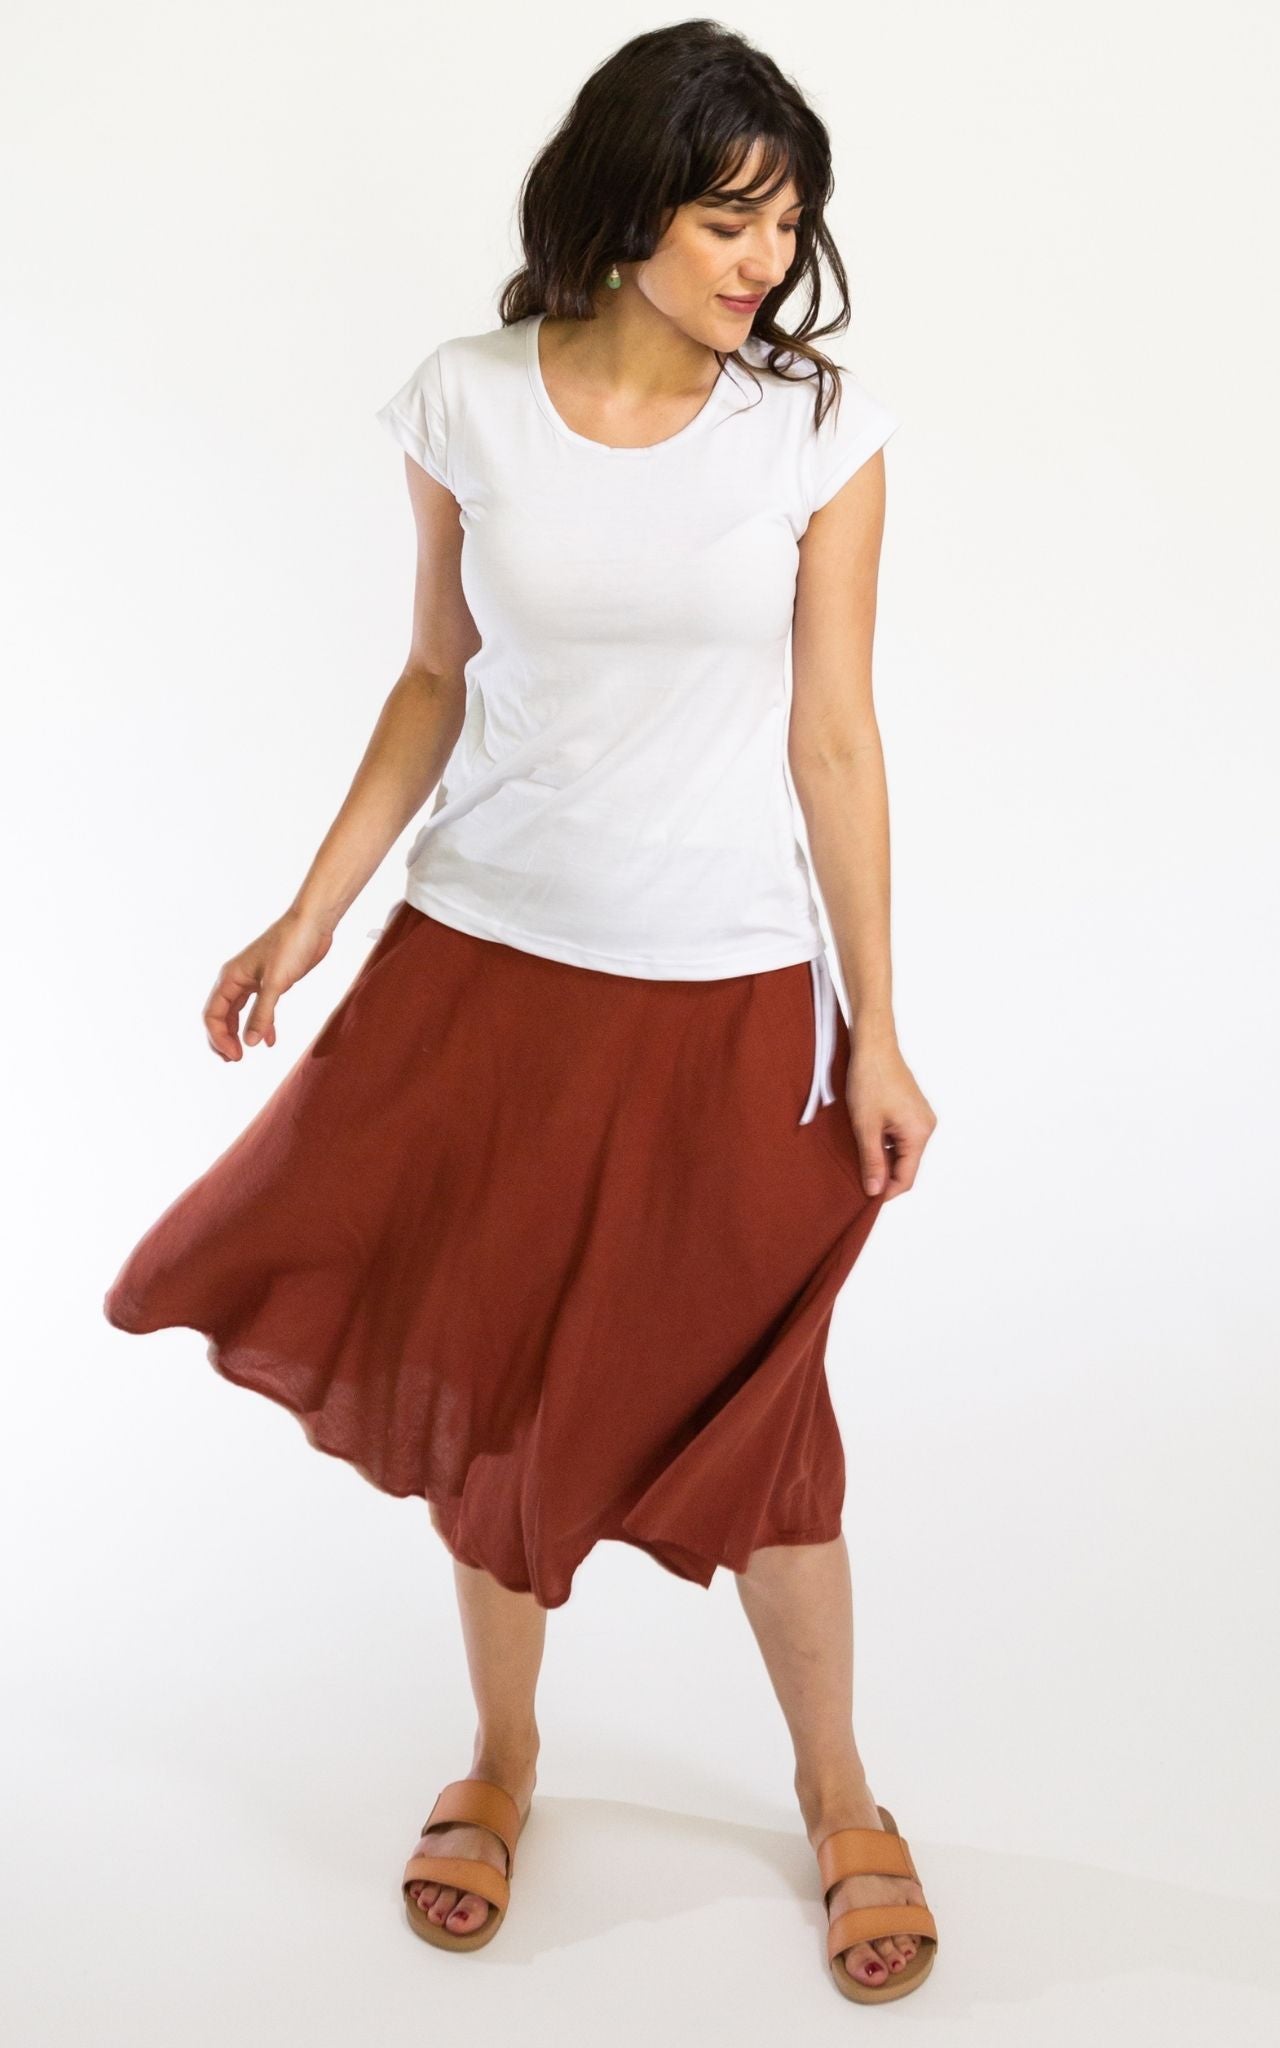 Surya Australia Ethical Cotton 'Rosa' Skirt from Nepal - Rust #colour_rust